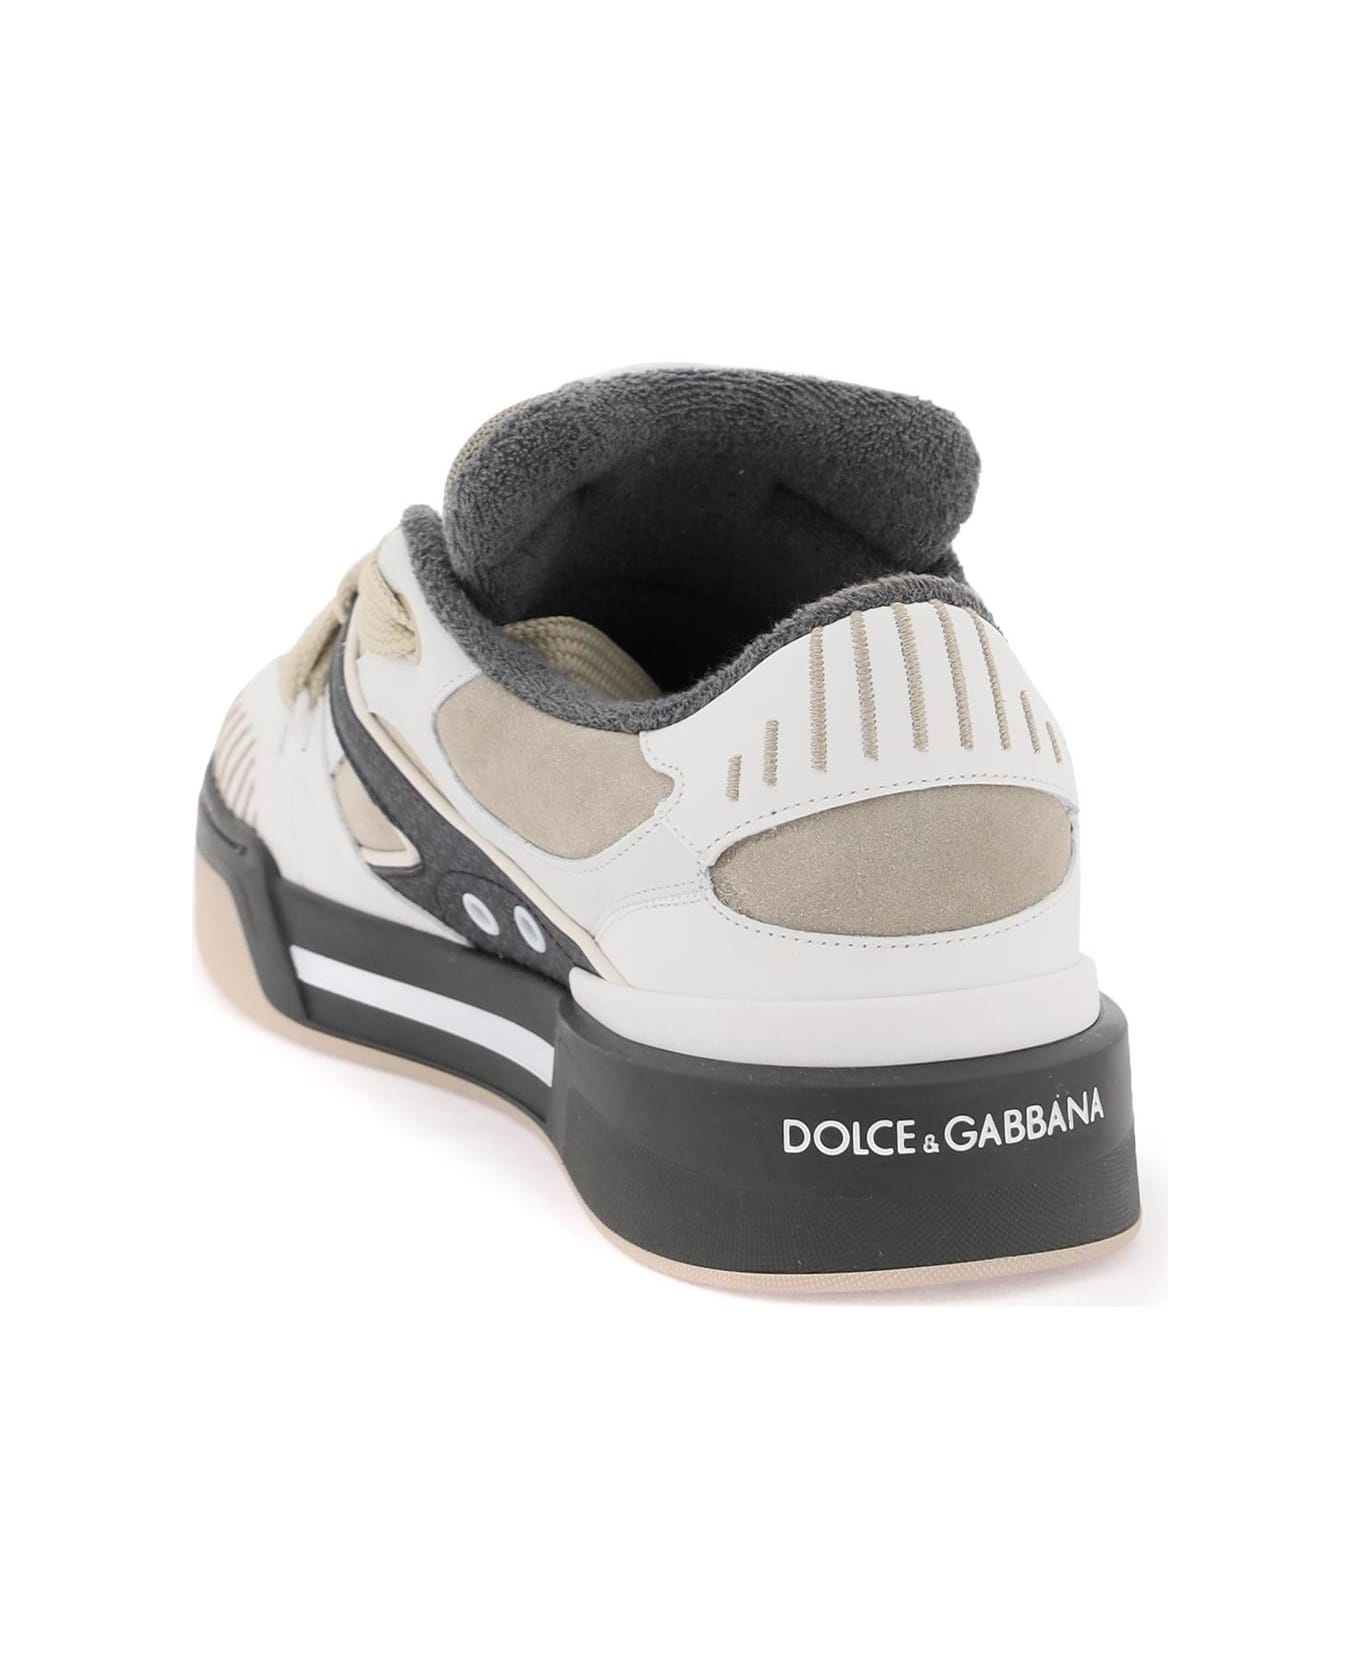 Dolce & Gabbana New Roma Sneakers - Tortora スニーカー